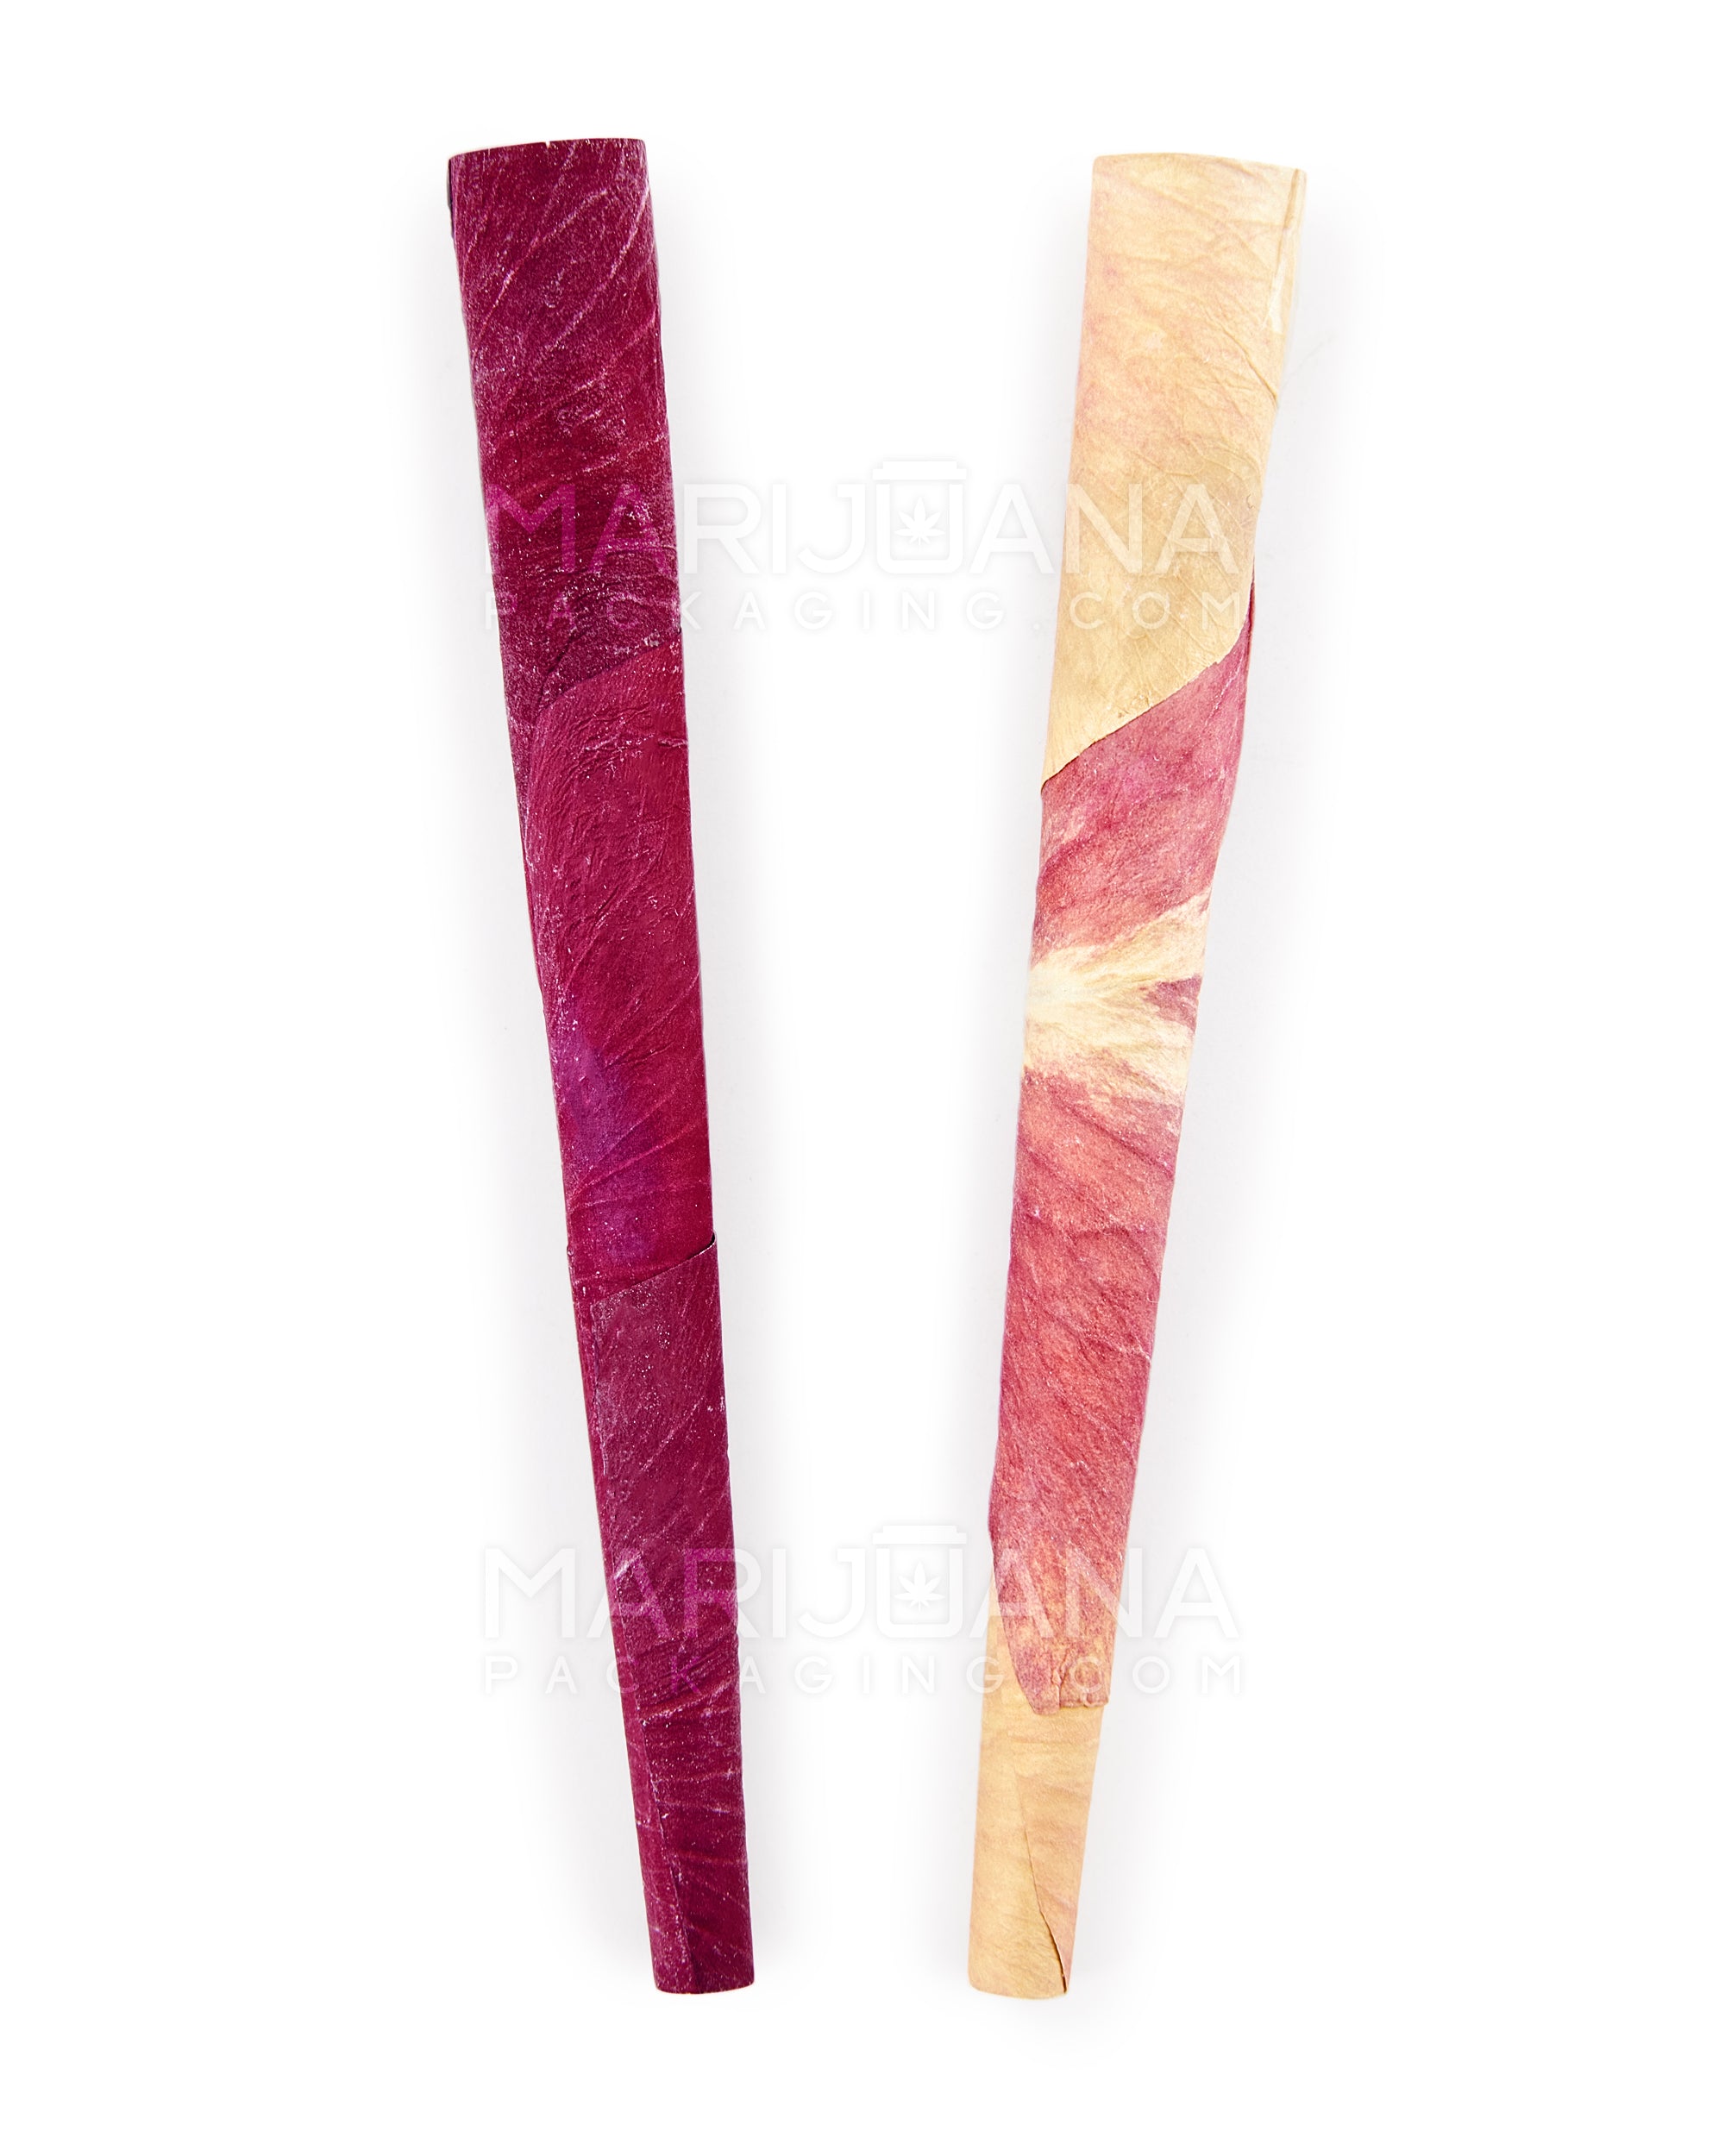 PETALS | Handmade Organic Rose Petal King Size Pre-Rolled Cones | 109mm - Organic Rose Paper - 2 Count